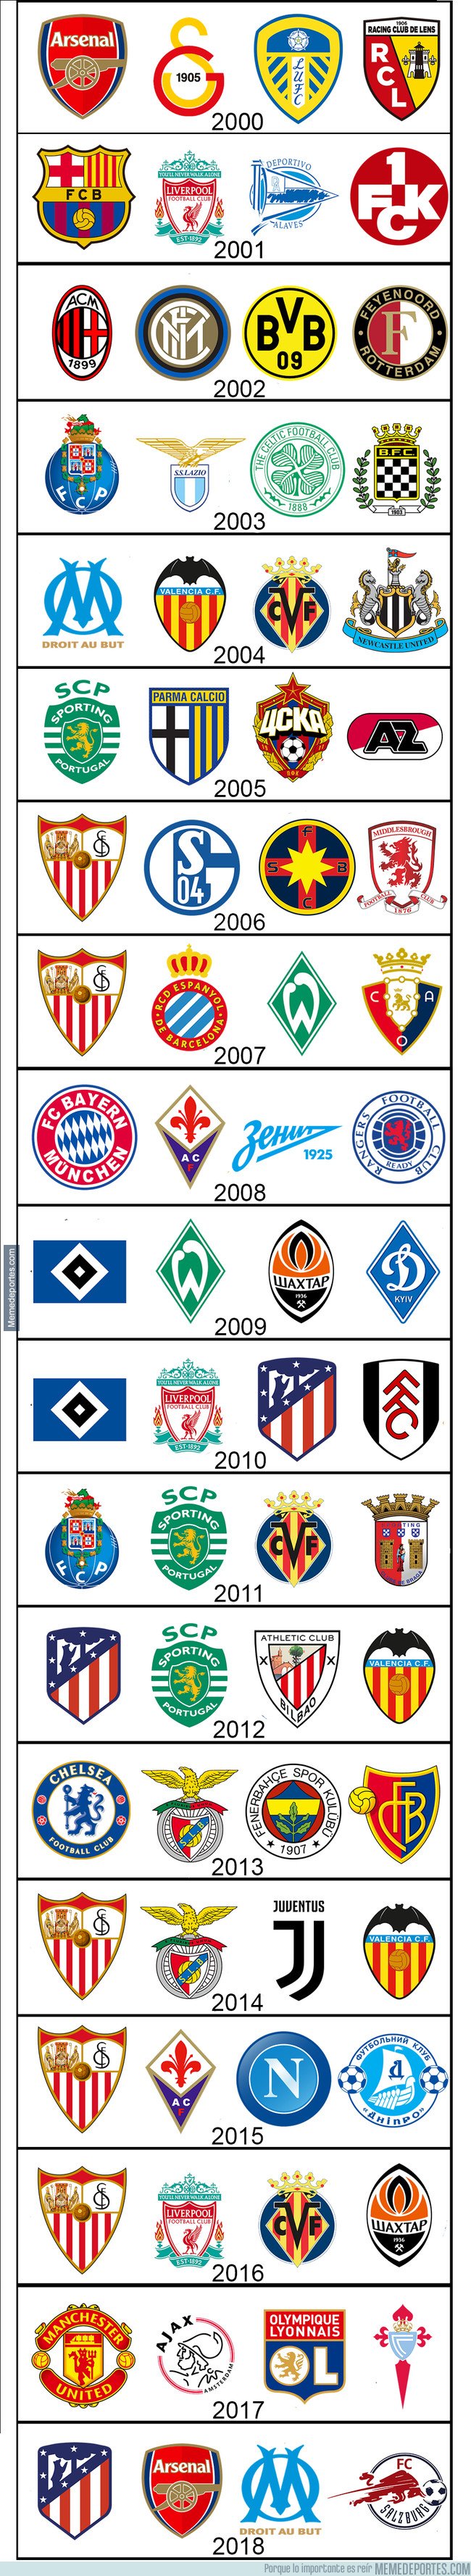 1030925 - Semifinales de Europa League (2000-2018)